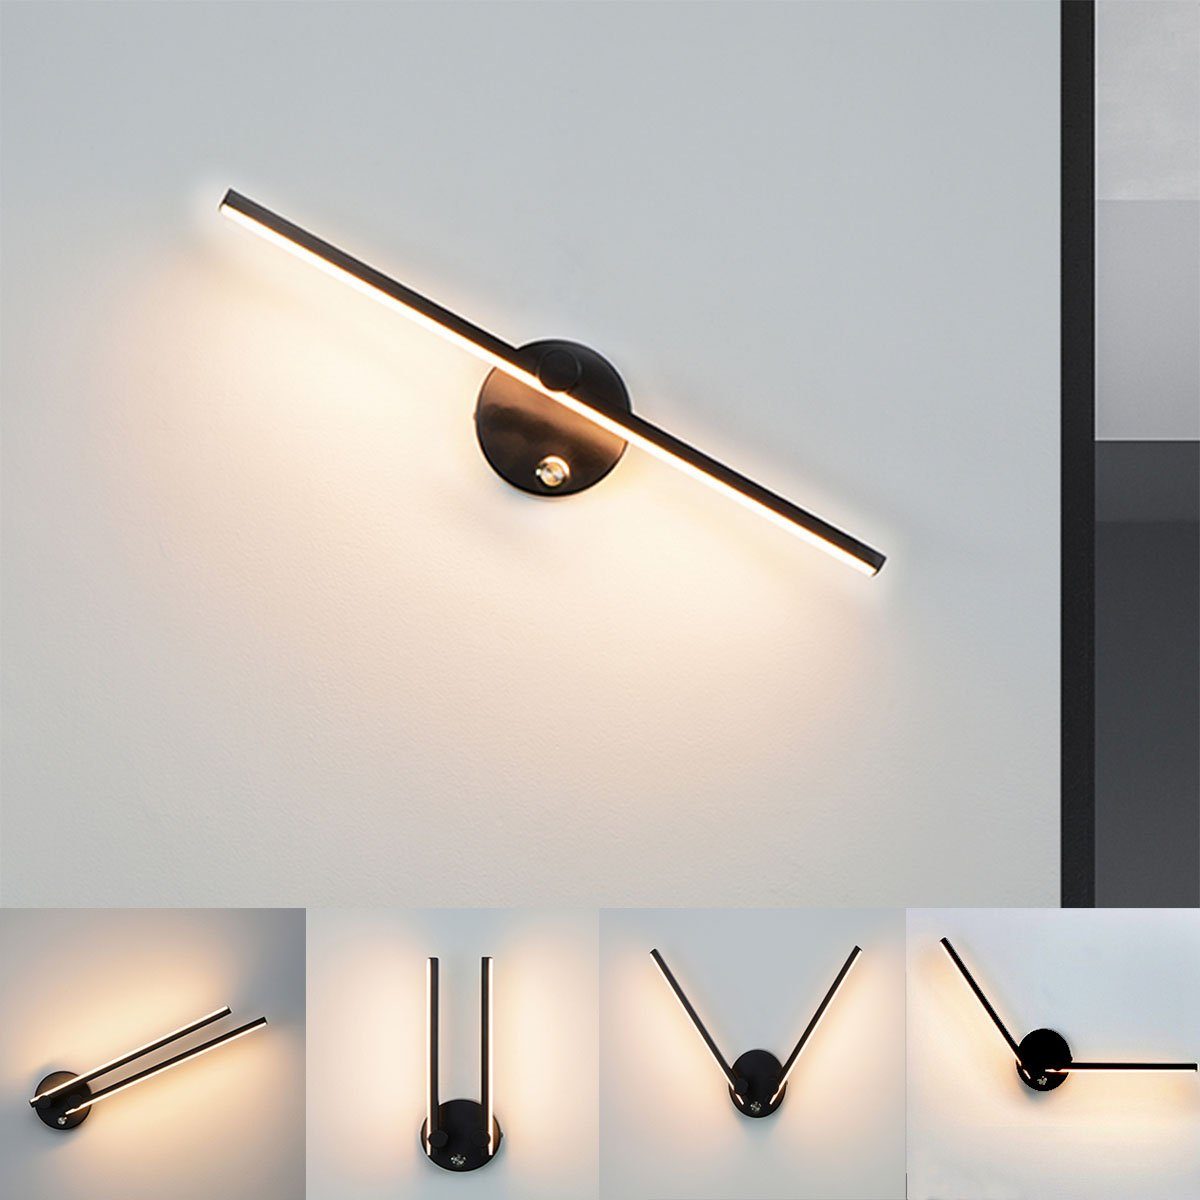 oyajia Wandleuchte LED Wandleuchte, 12W Wand Lichter mit Einstellbar Лампиarm, 53cm, LED fest integriert, Warmweiß, Nordic Wandleuchte